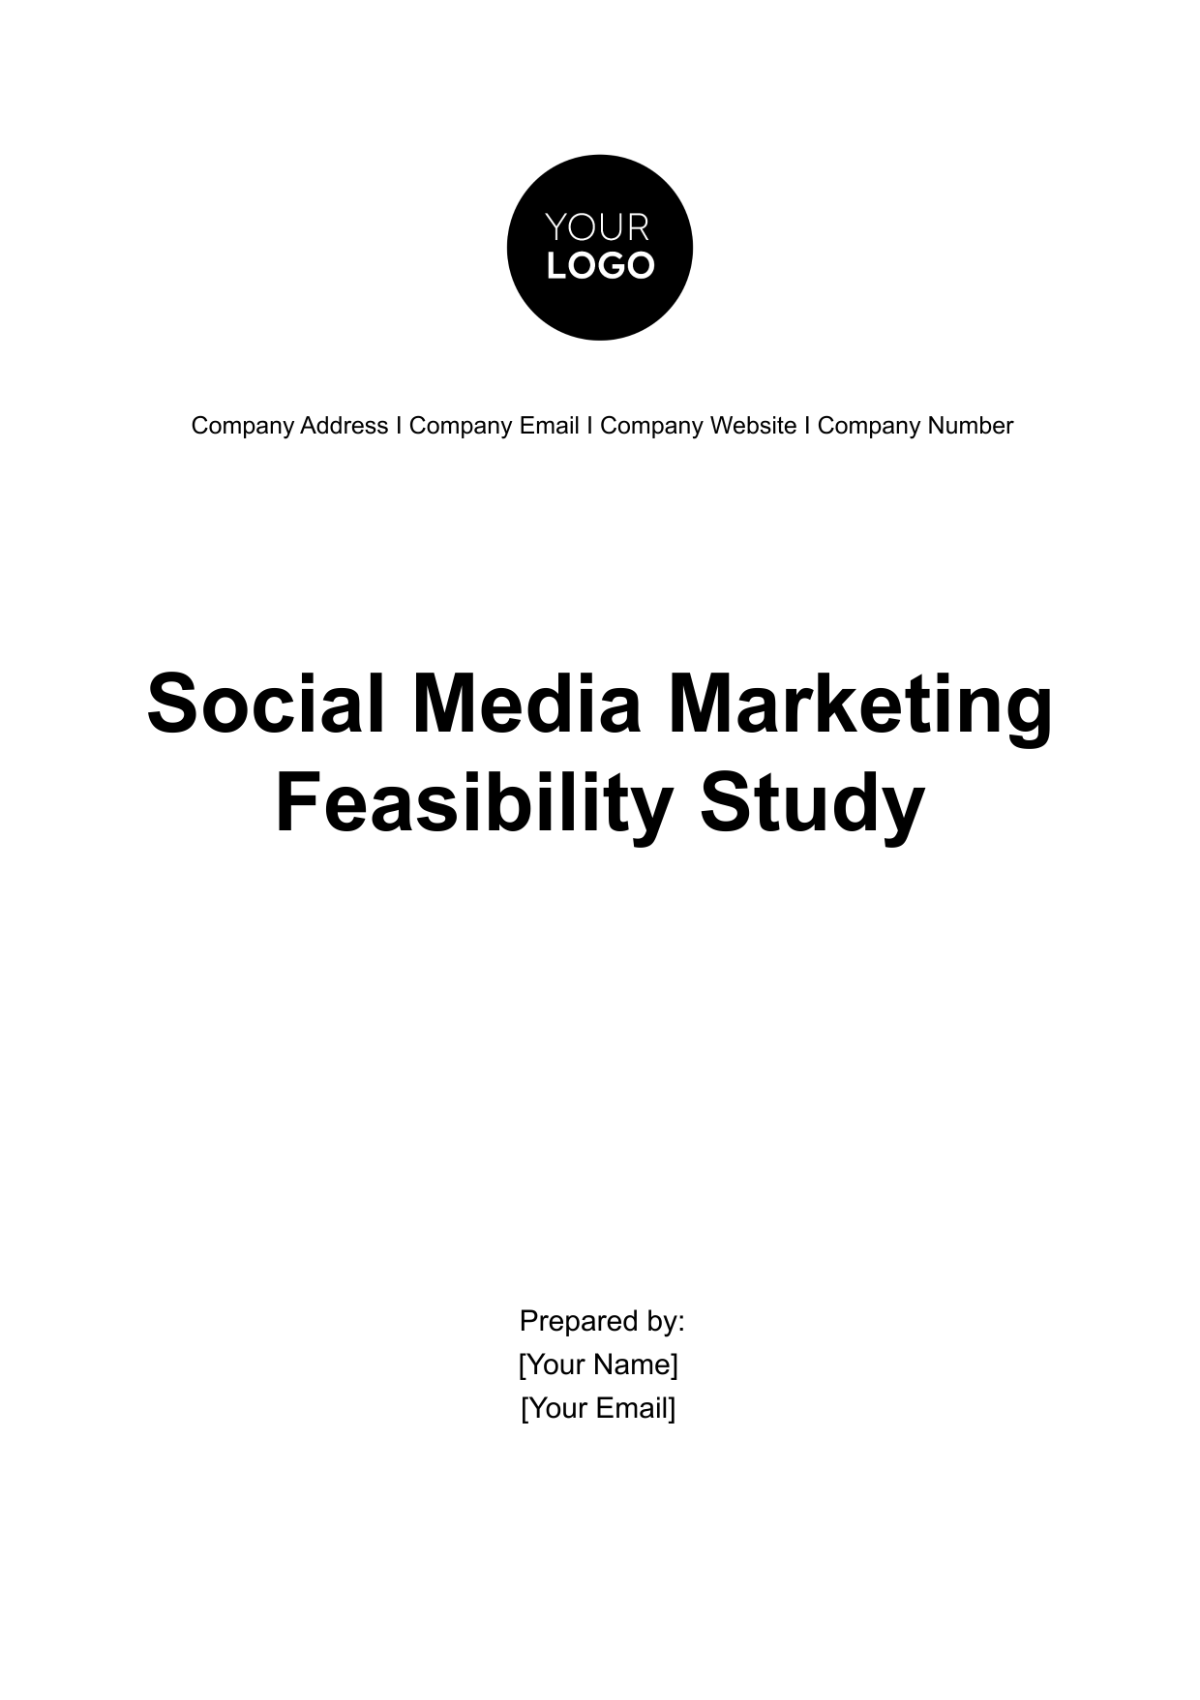 Social Media Marketing Feasibility Study Template